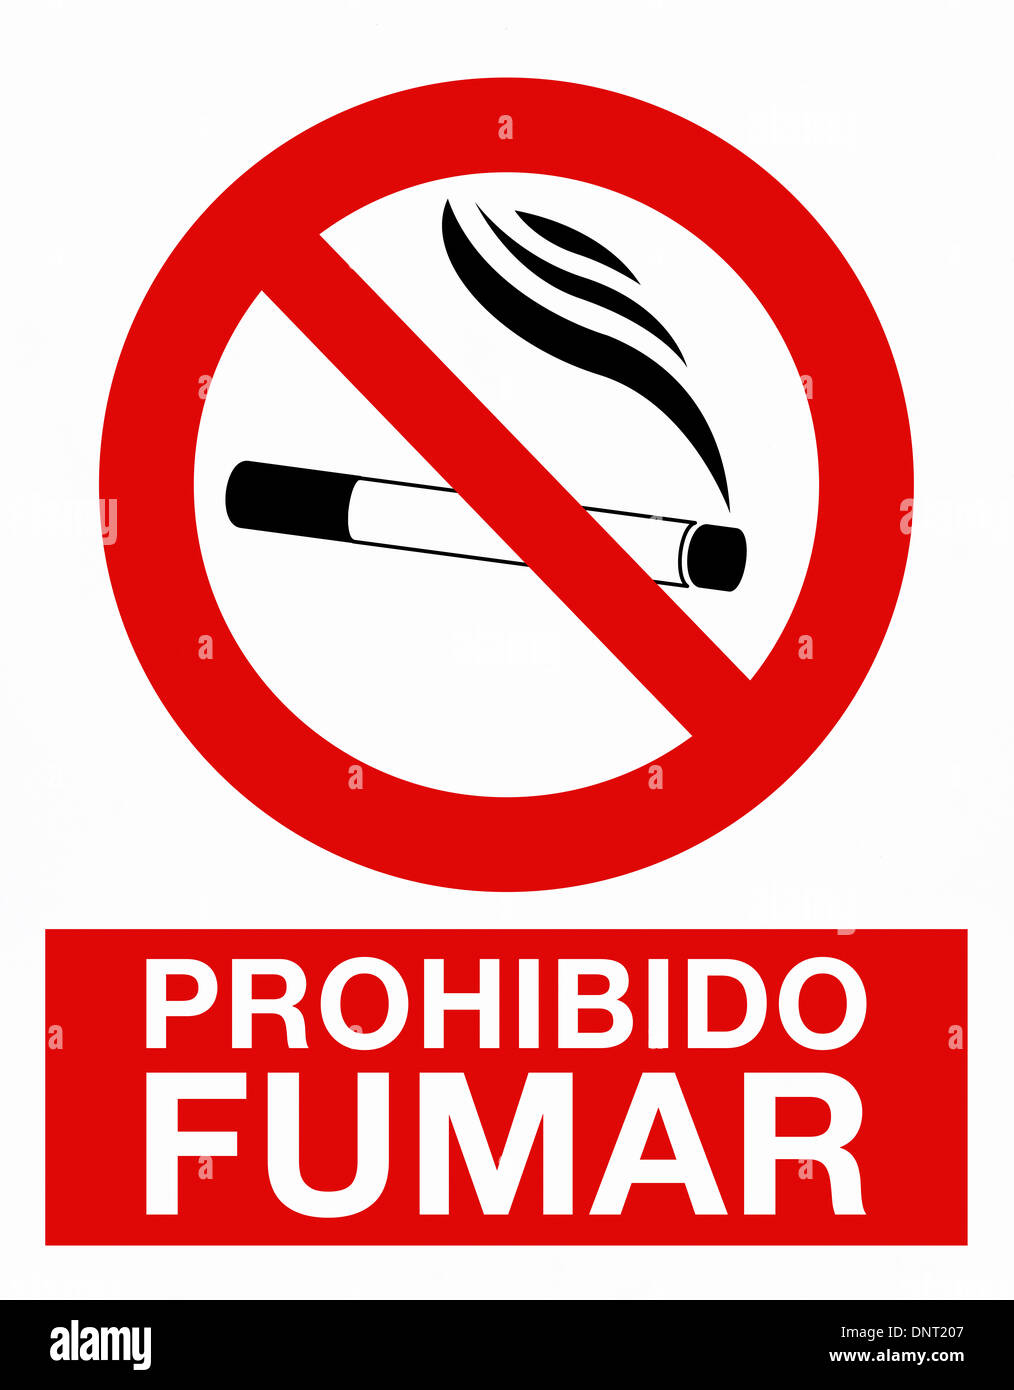 No smoking sign in spanish language Stock Photo